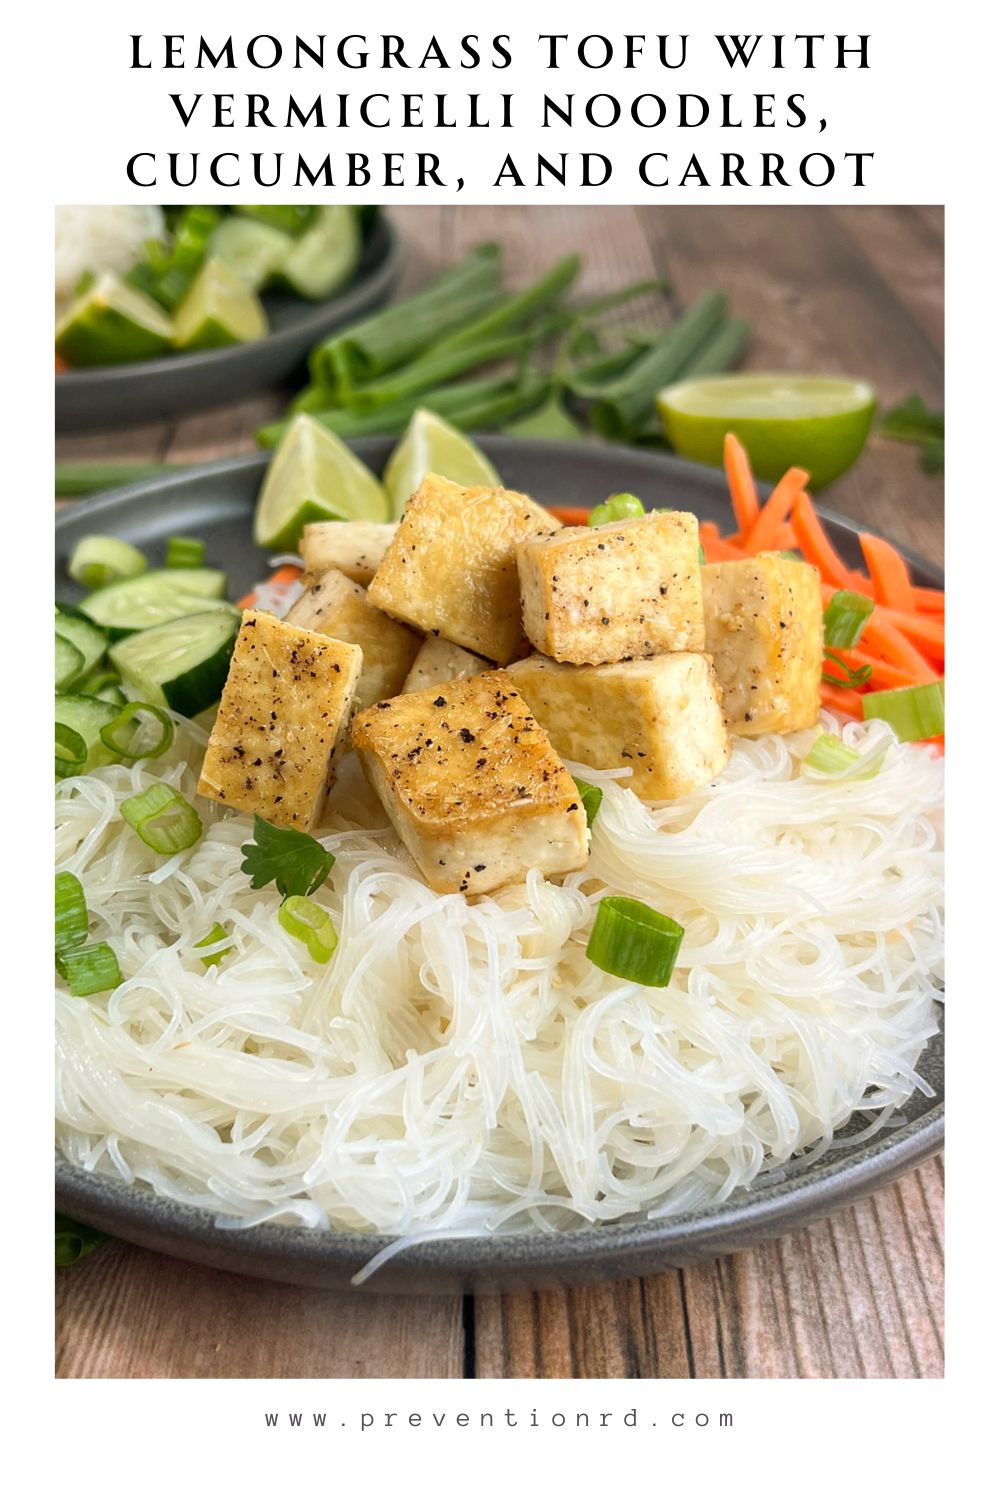 Lemongrass Tofu with Vermicelli Noodles, Cucumber, and Carrot via @preventionrd